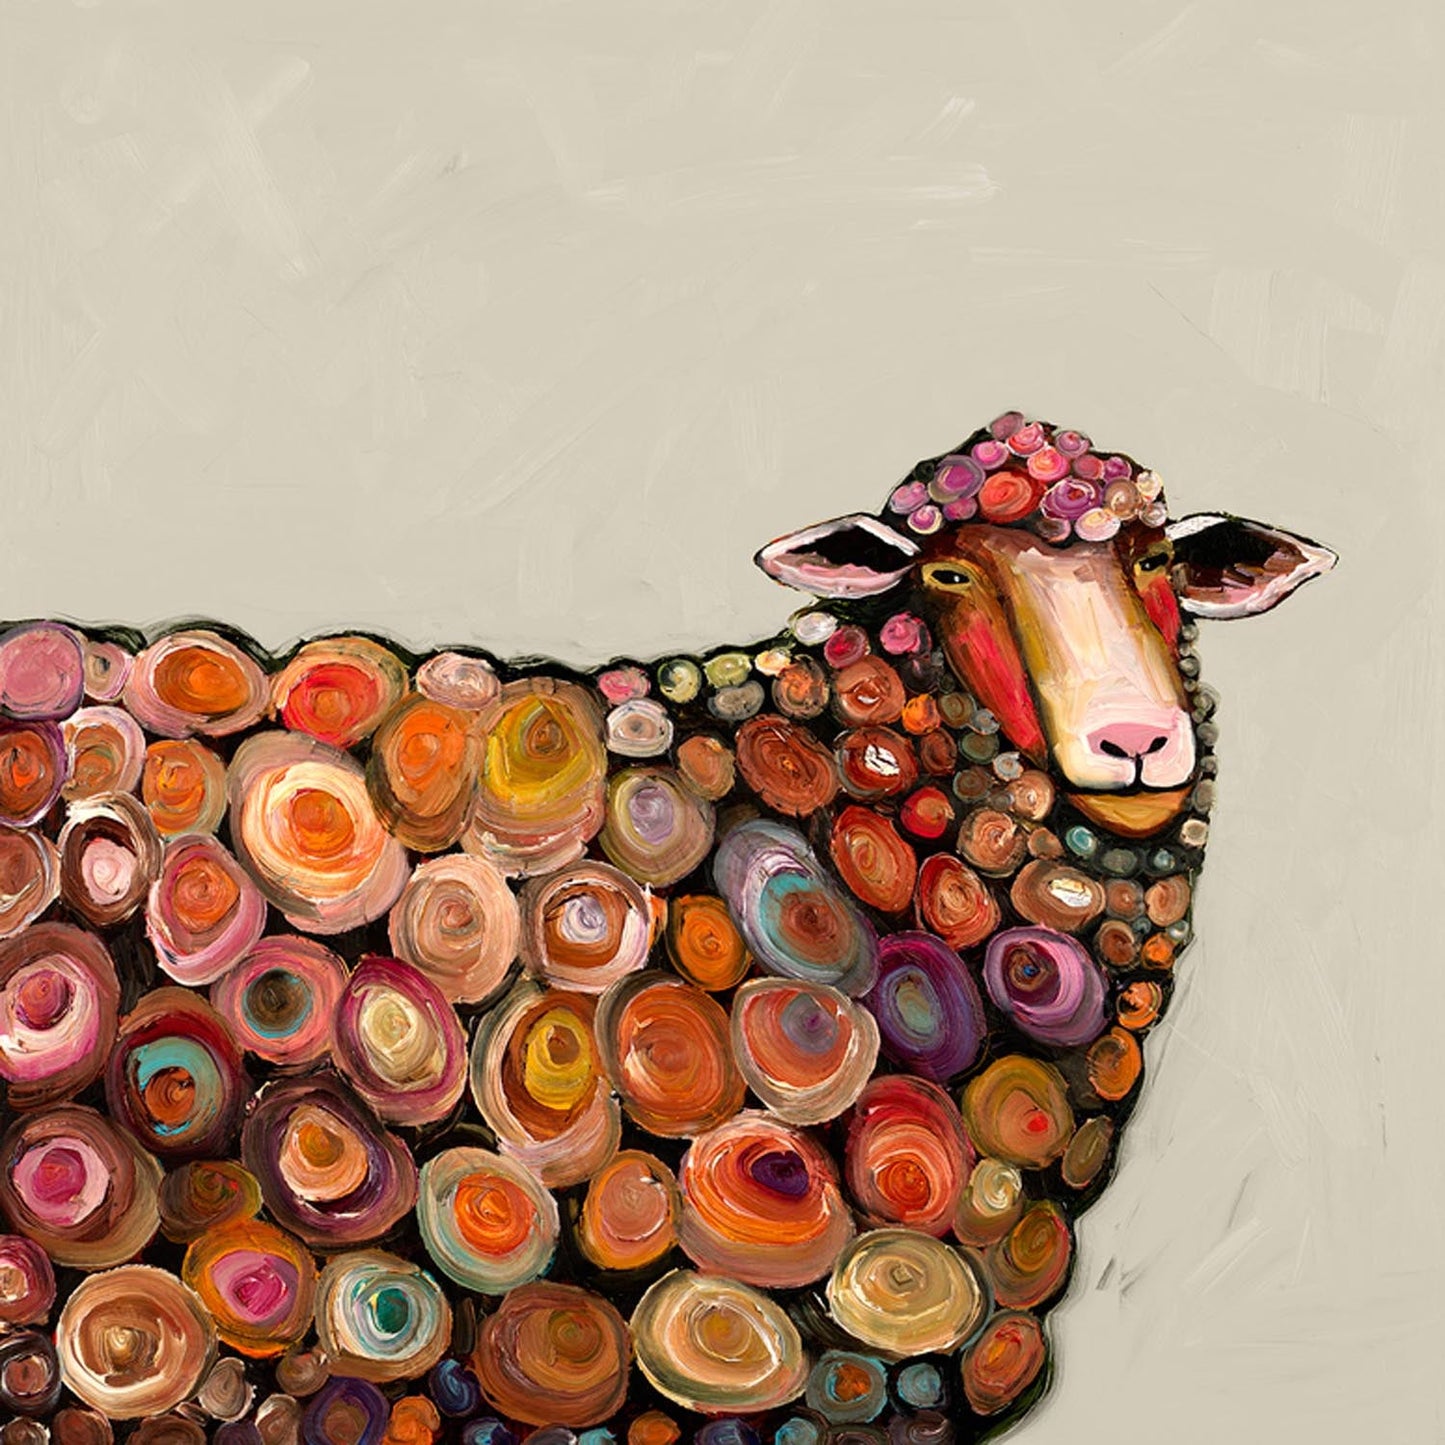 Lamb Canvas Wall Art